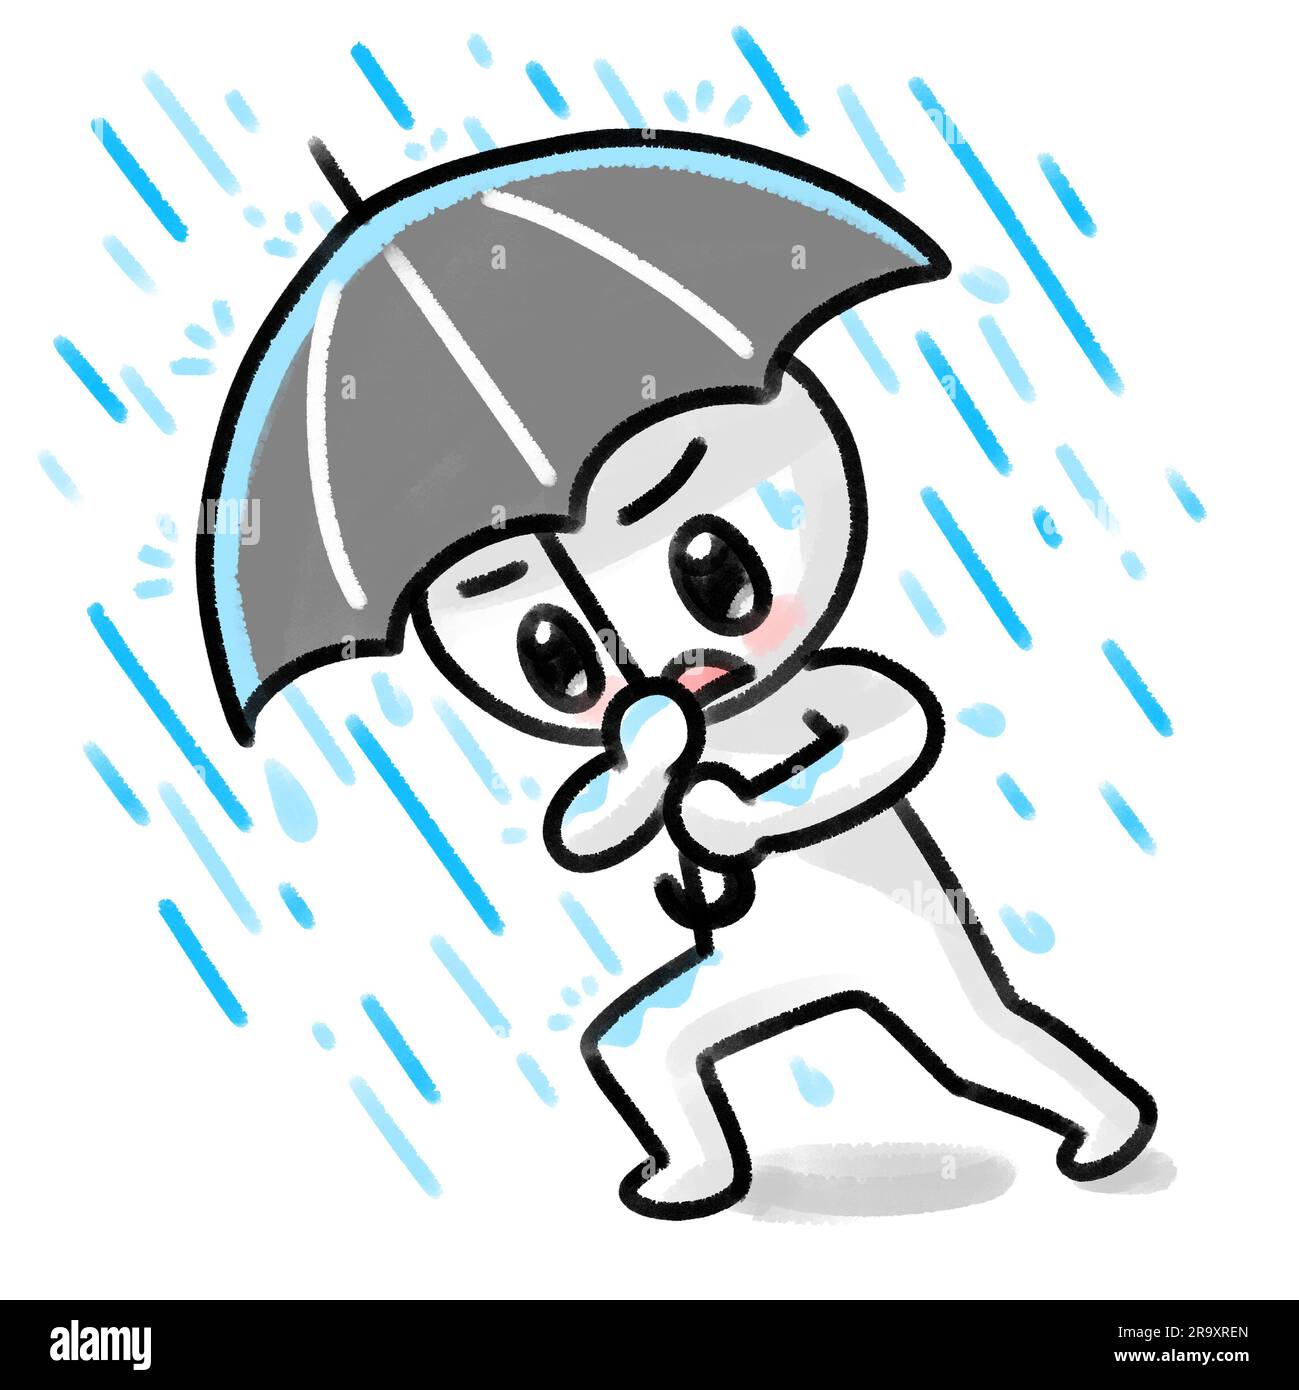 torrential rain, Illustration character expression of heavy rain Stock Photo